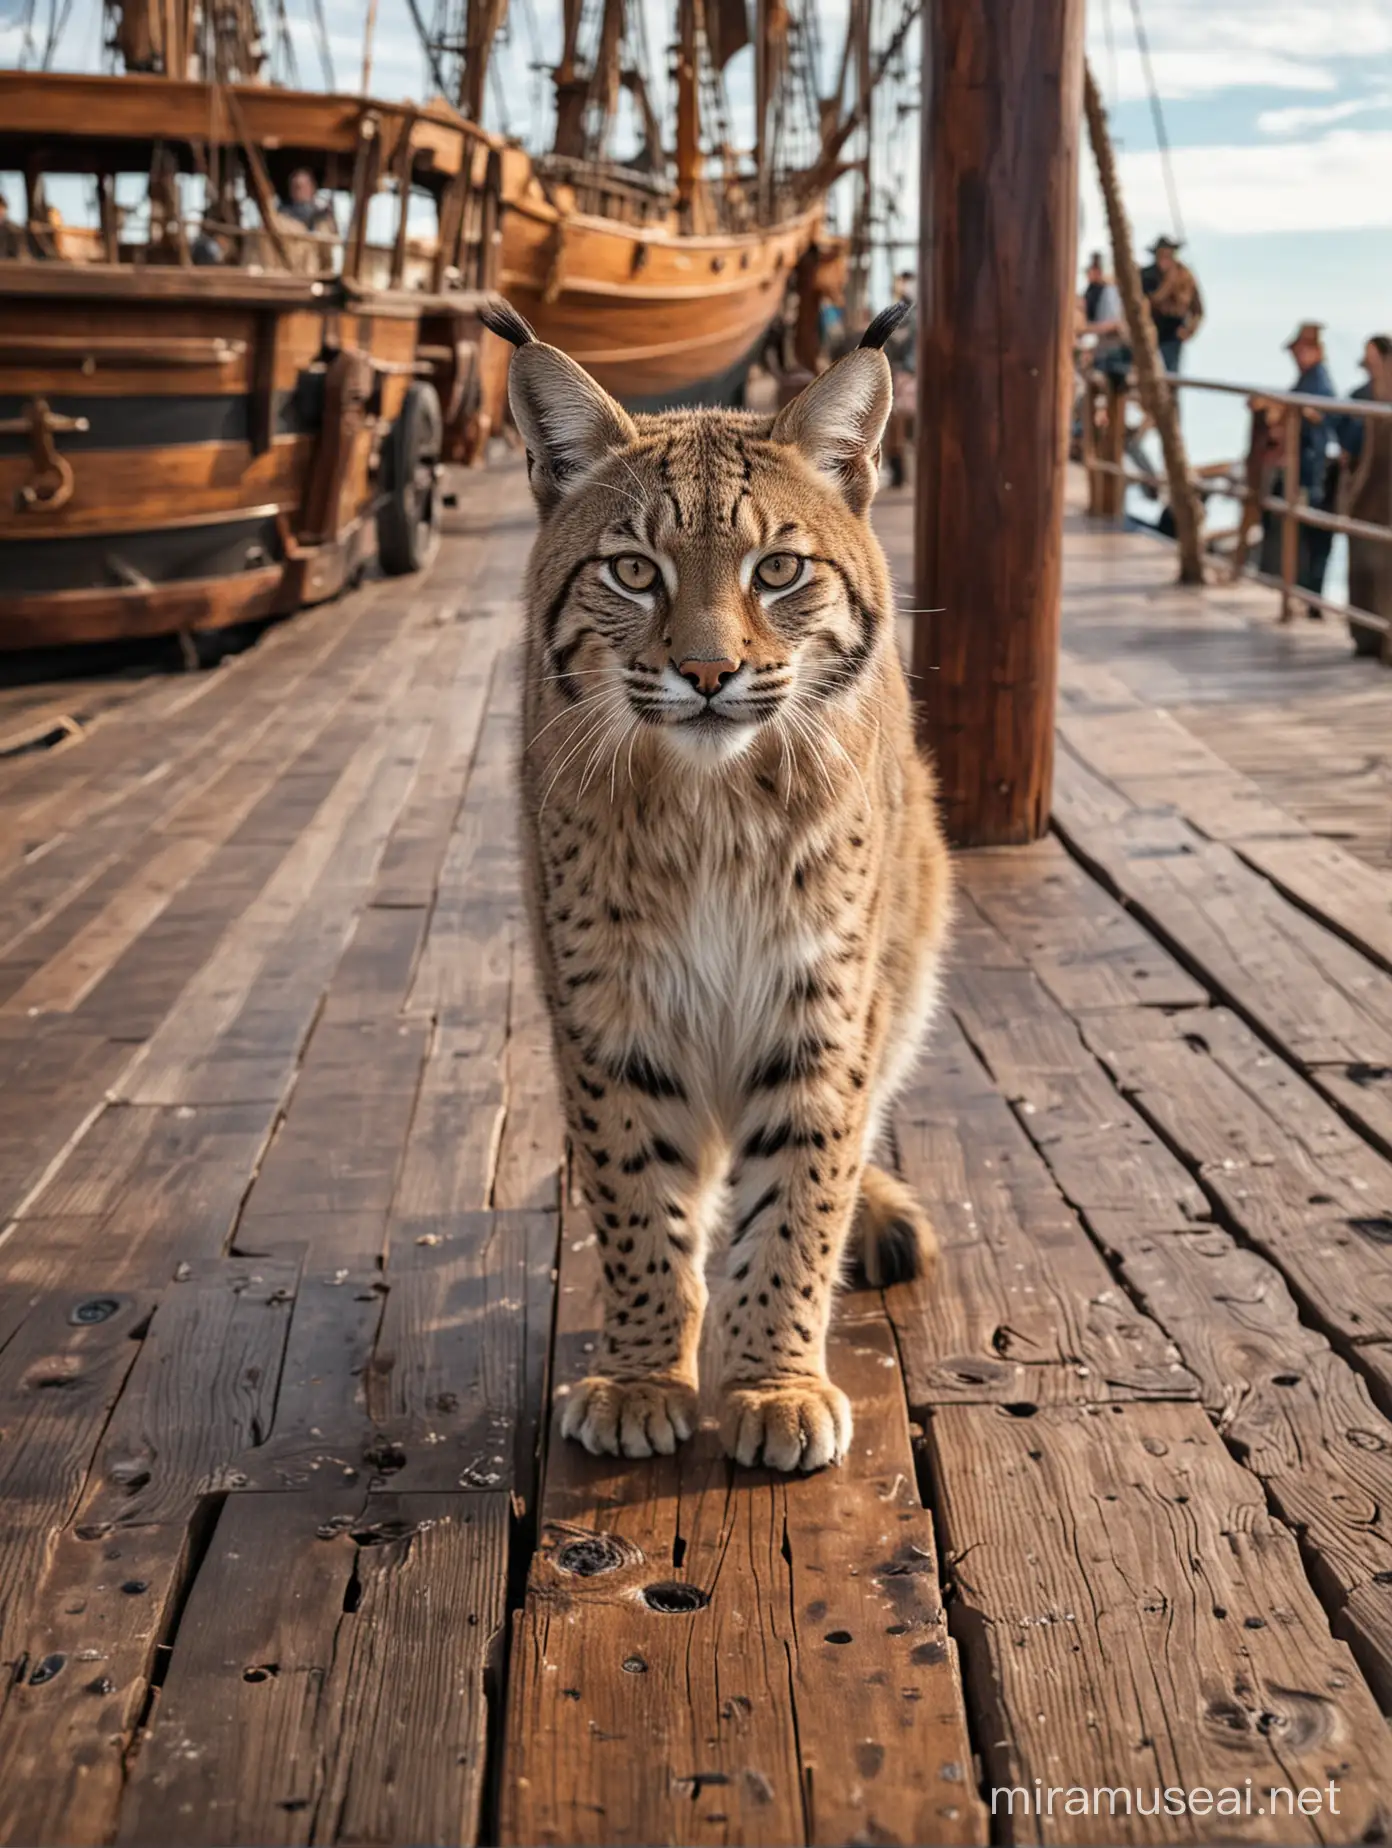 Bobcat Walking on Wooden Floor of Pirate Ships Main Deck